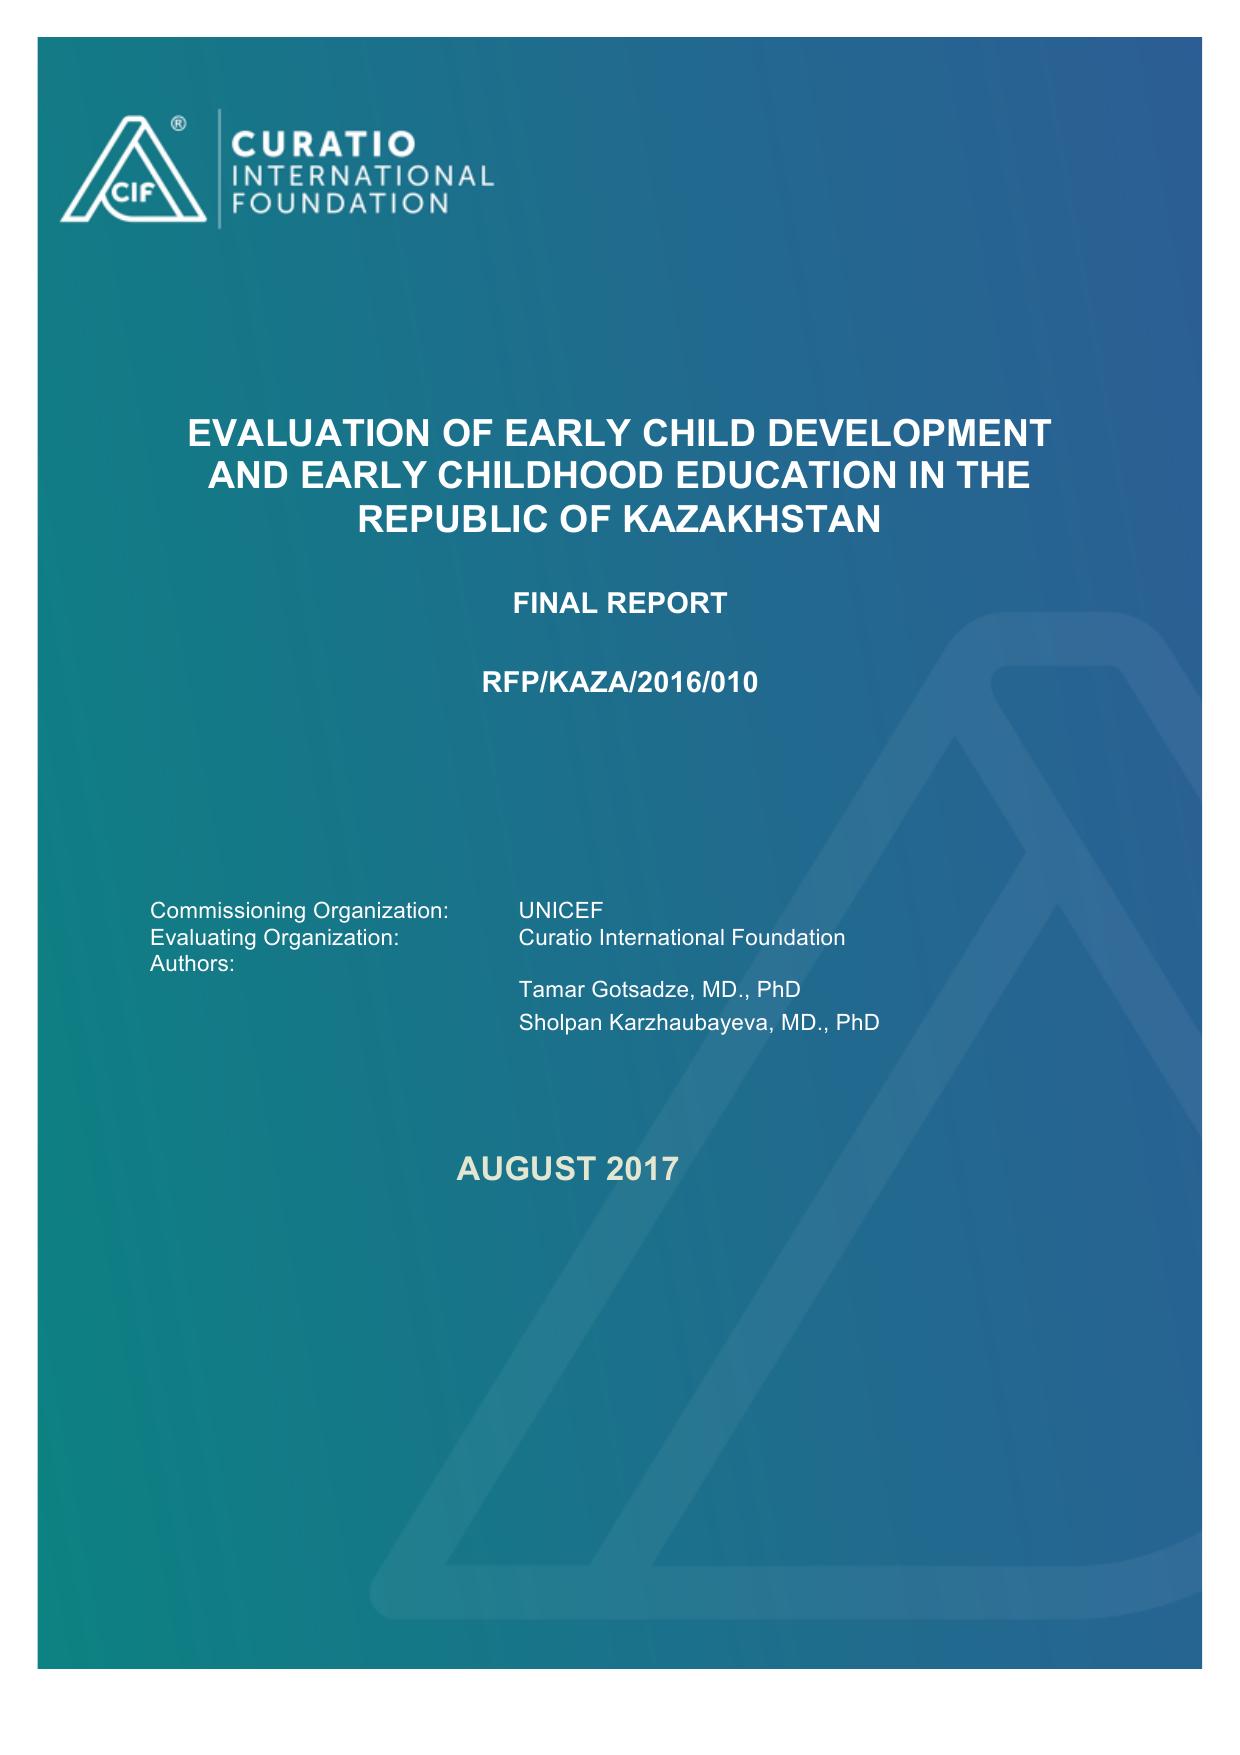 Microsoft Word - CIF-UNICEF-KAZ ECD_ECE_EVALUATION - FINAL VERSION -29.07.2017.docx